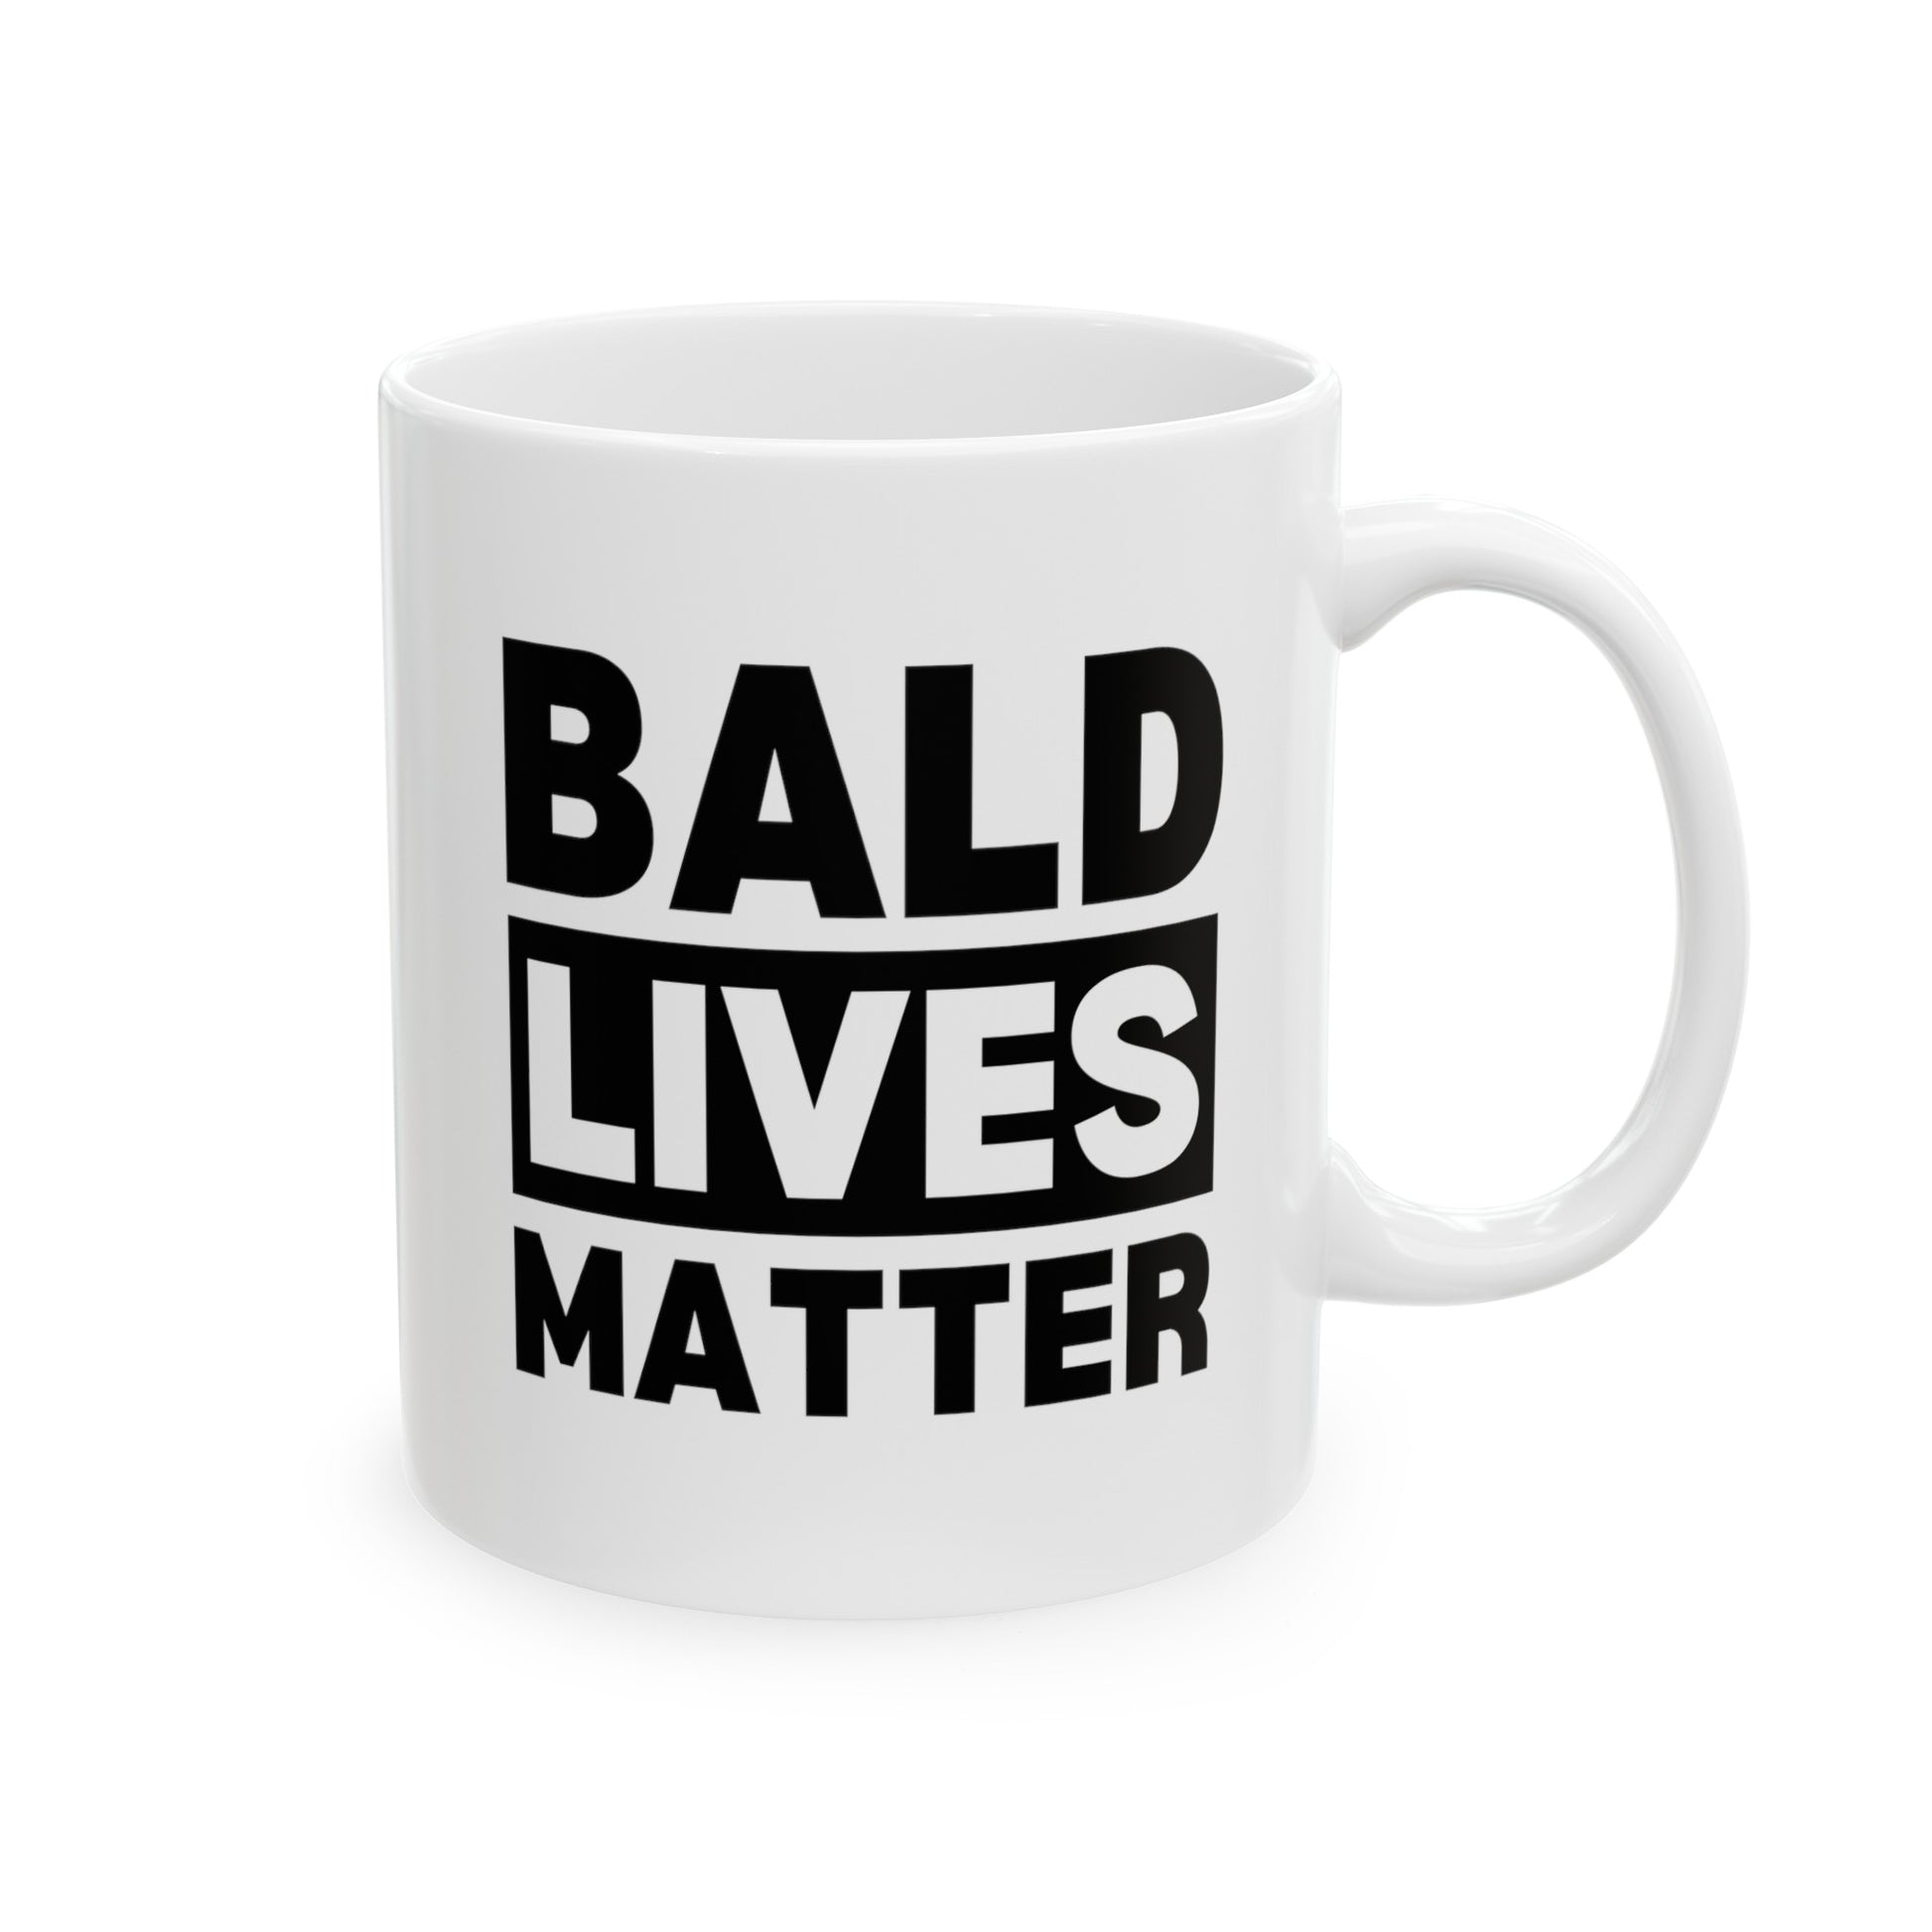 Bald Lives Matter 11oz white funny large coffee mug gift for middle aged men him baldi baldy birthday anniversary waveywares wavey wares wavywares wavy wares